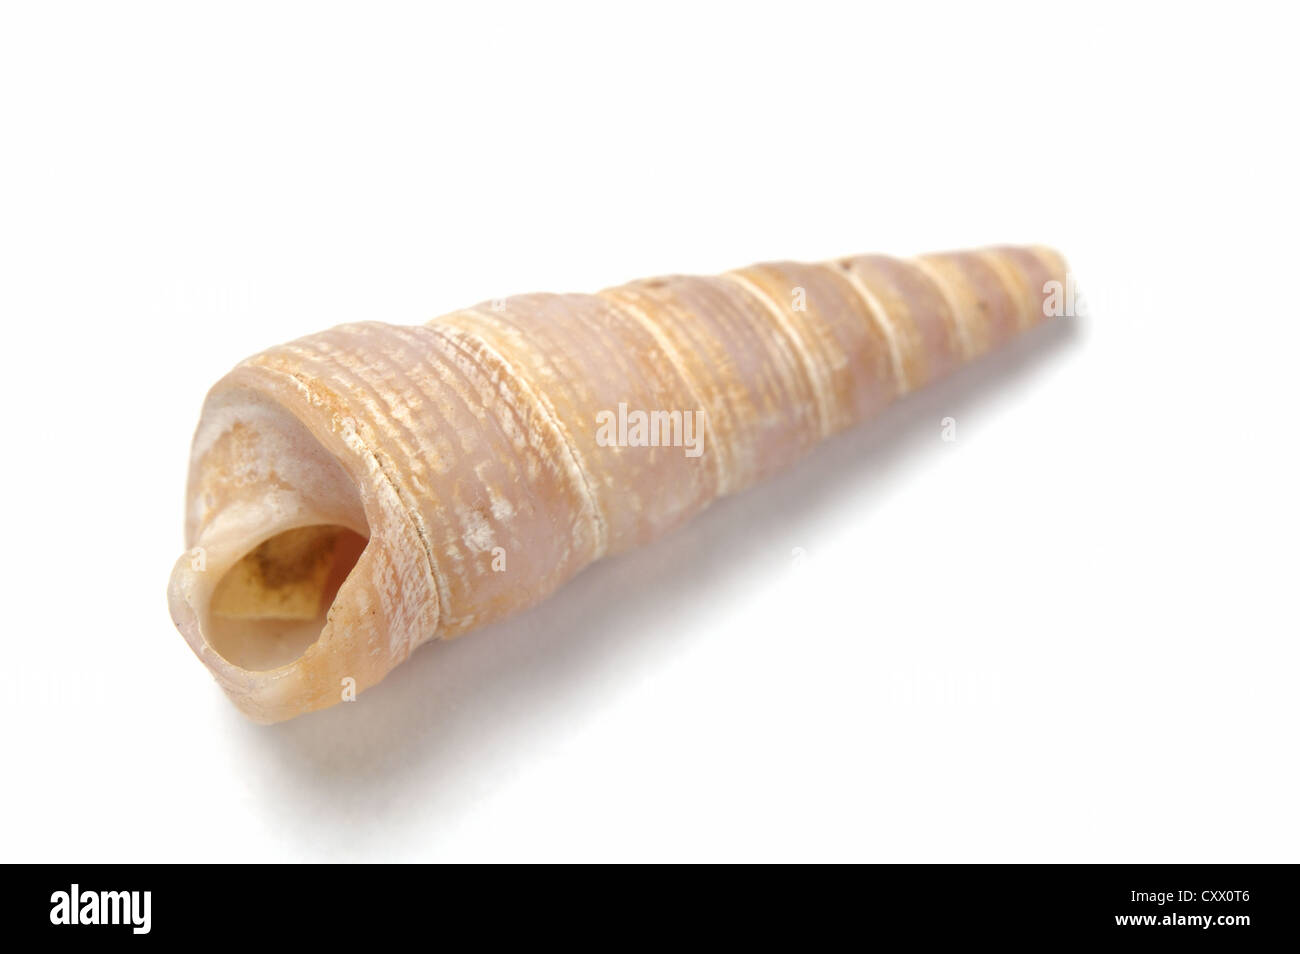 https://c8.alamy.com/comp/CXX0T6/turritellidae-cone-shaped-seashell-on-a-white-background-CXX0T6.jpg